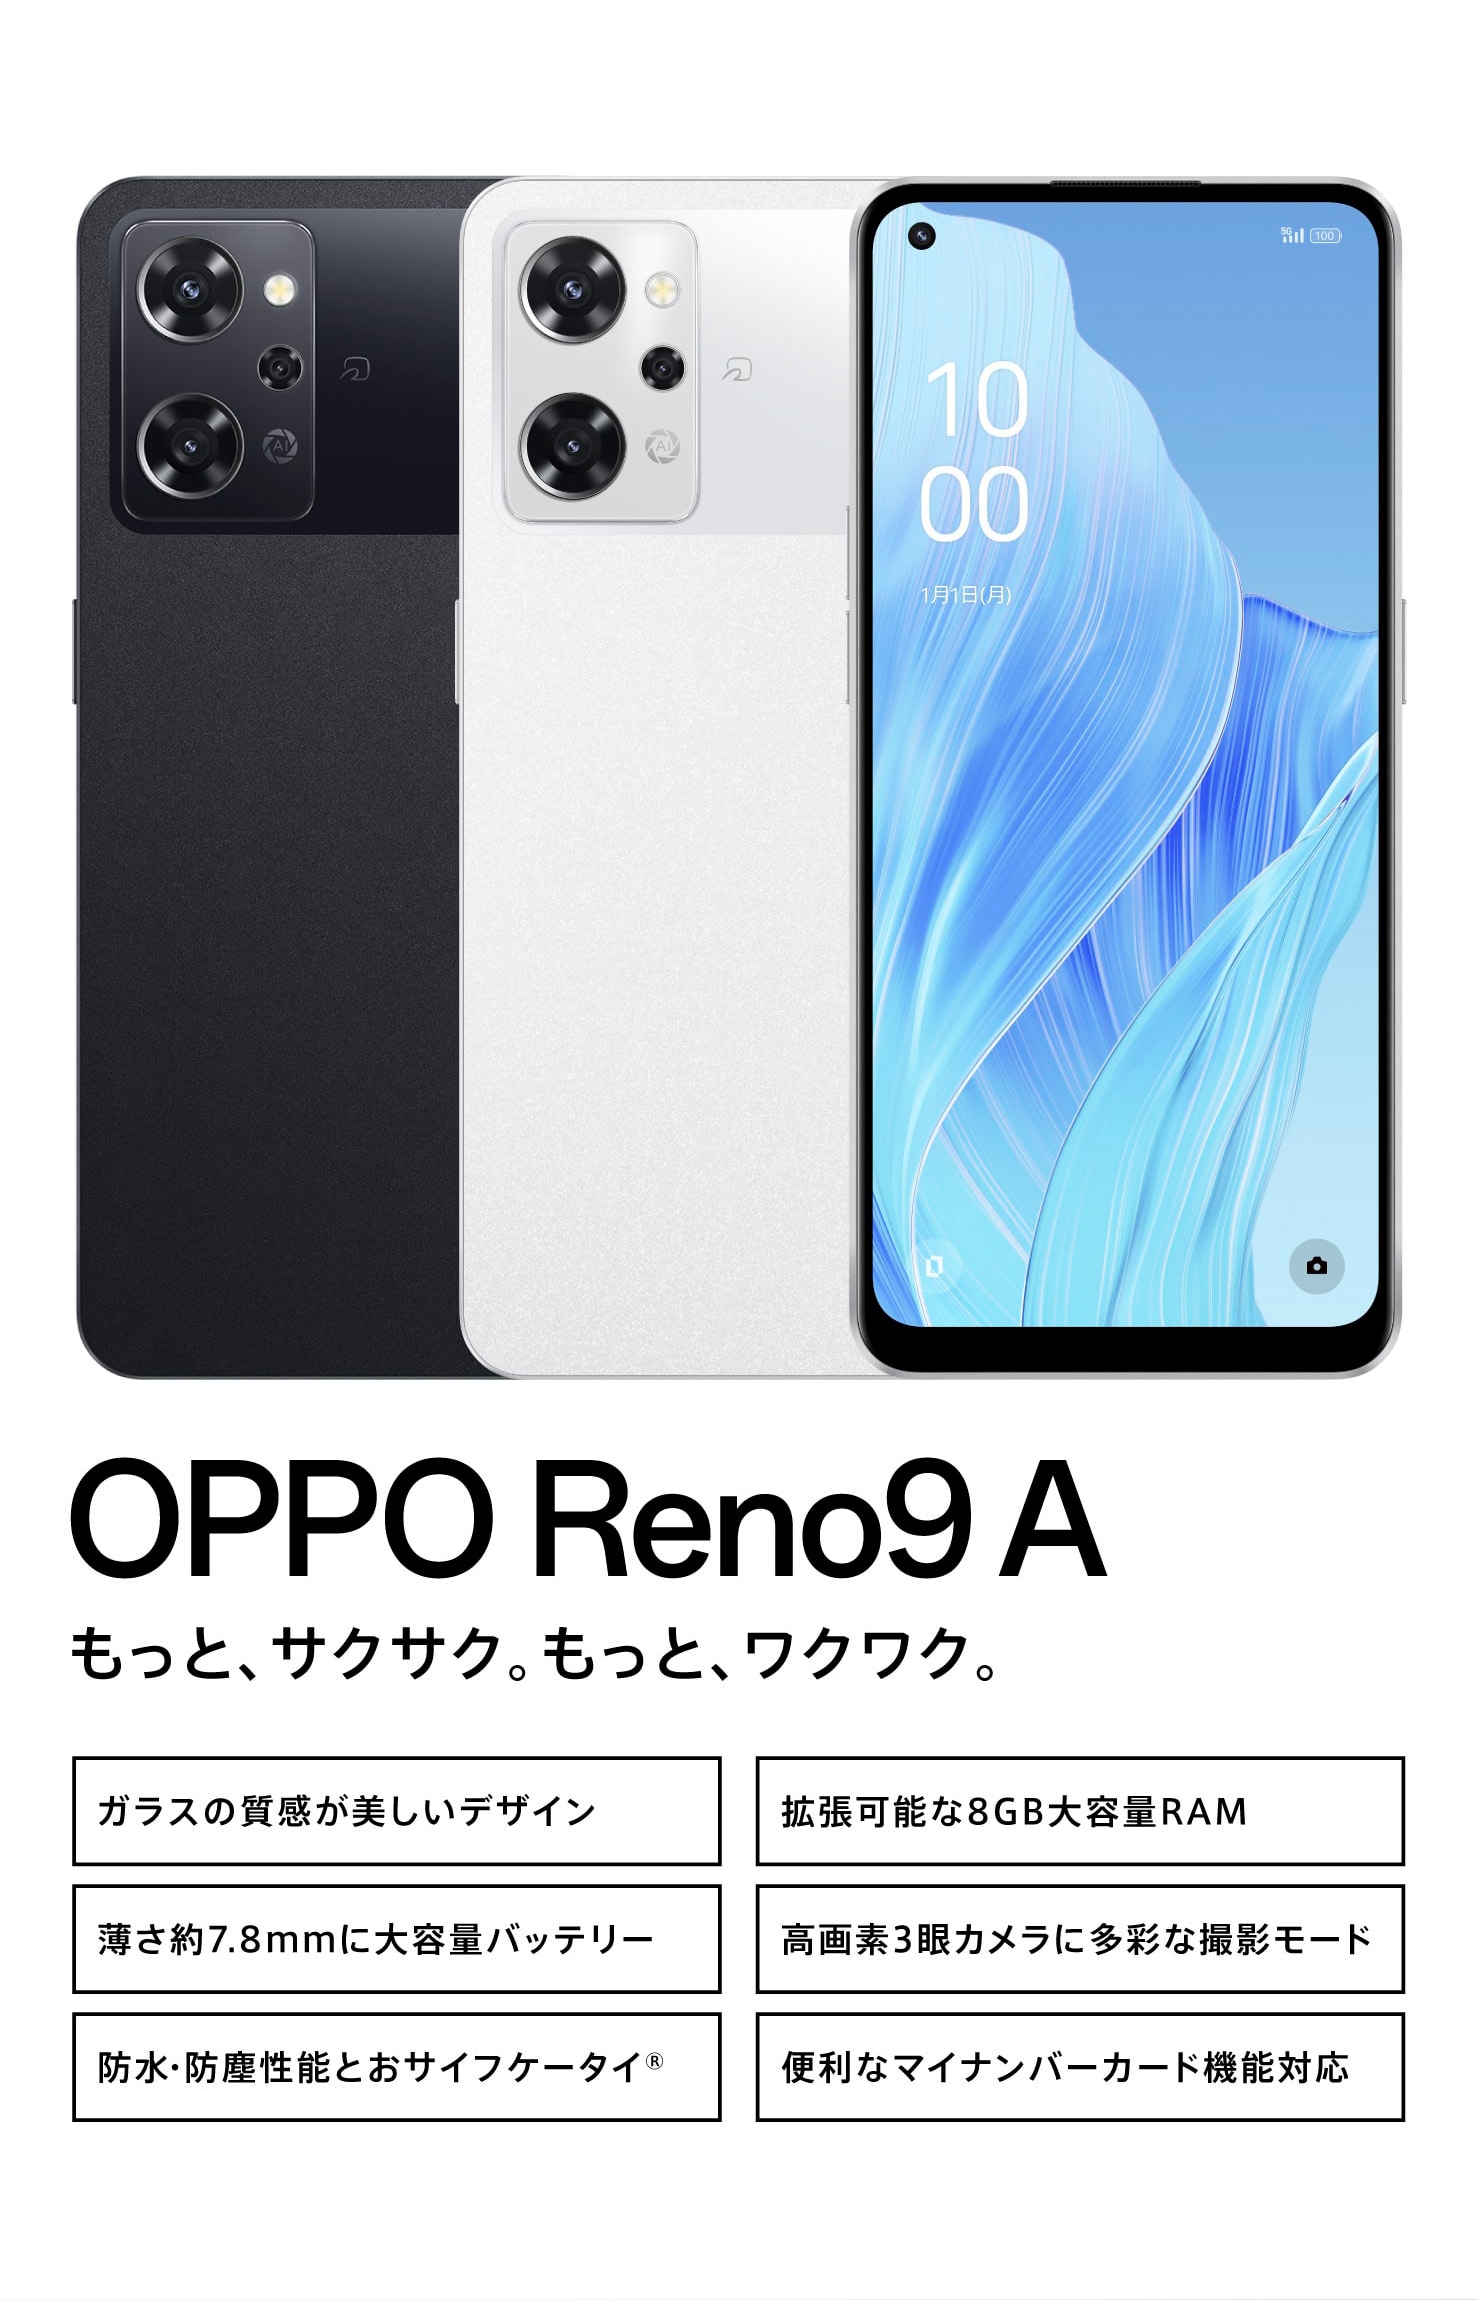 OPPO Reno9 A【SIMFREE】 | スマートフォン | OPPO公式オンラインショップ